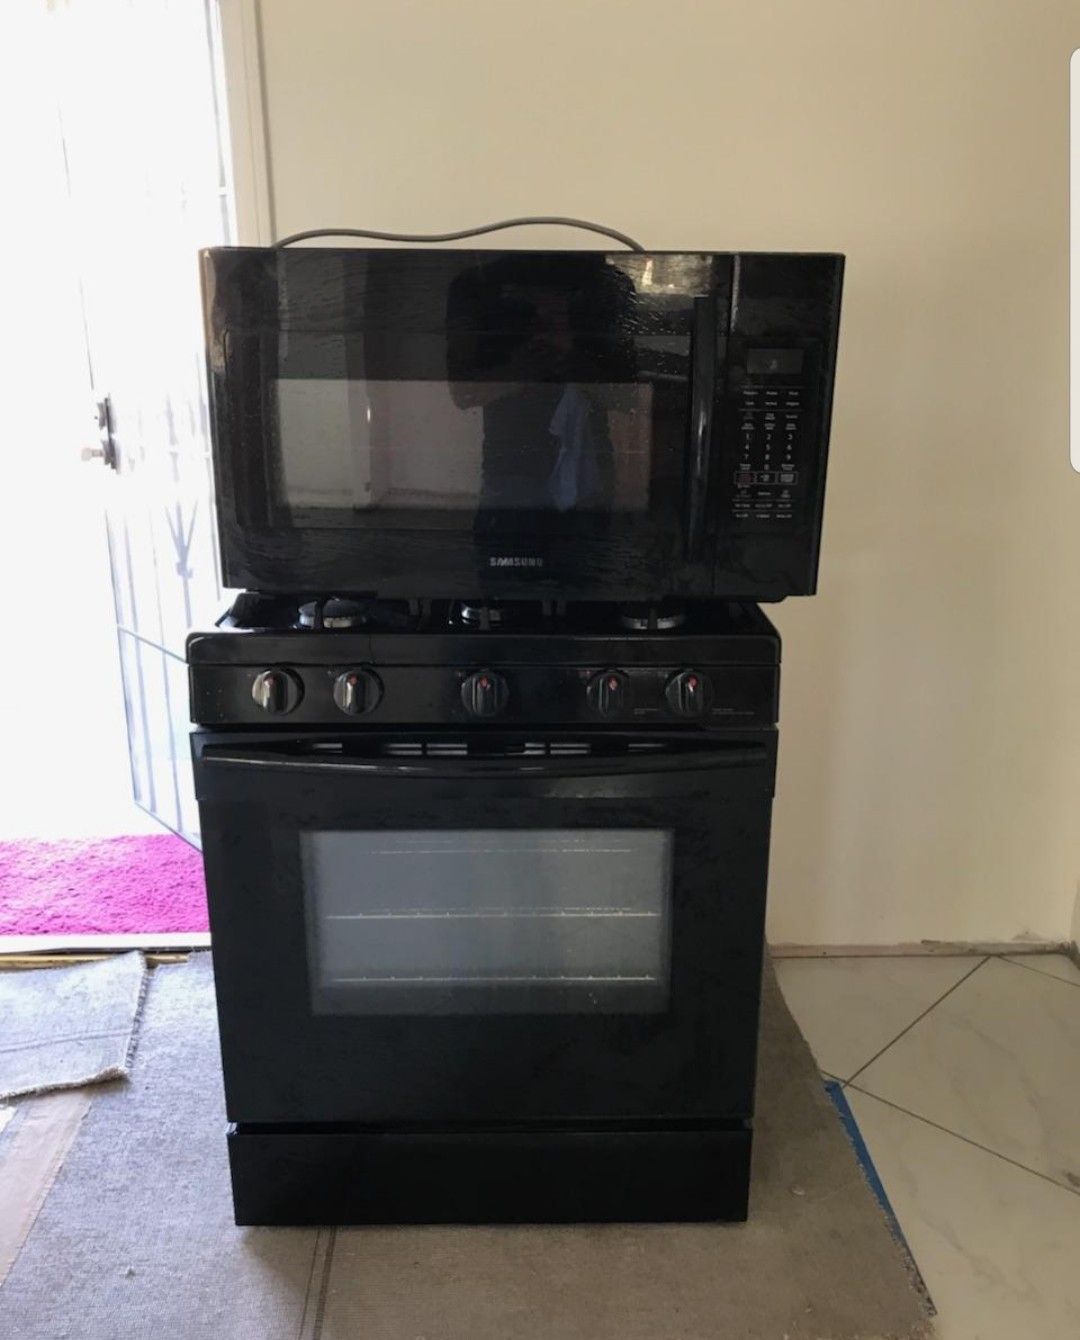 Samsung stove and microwave